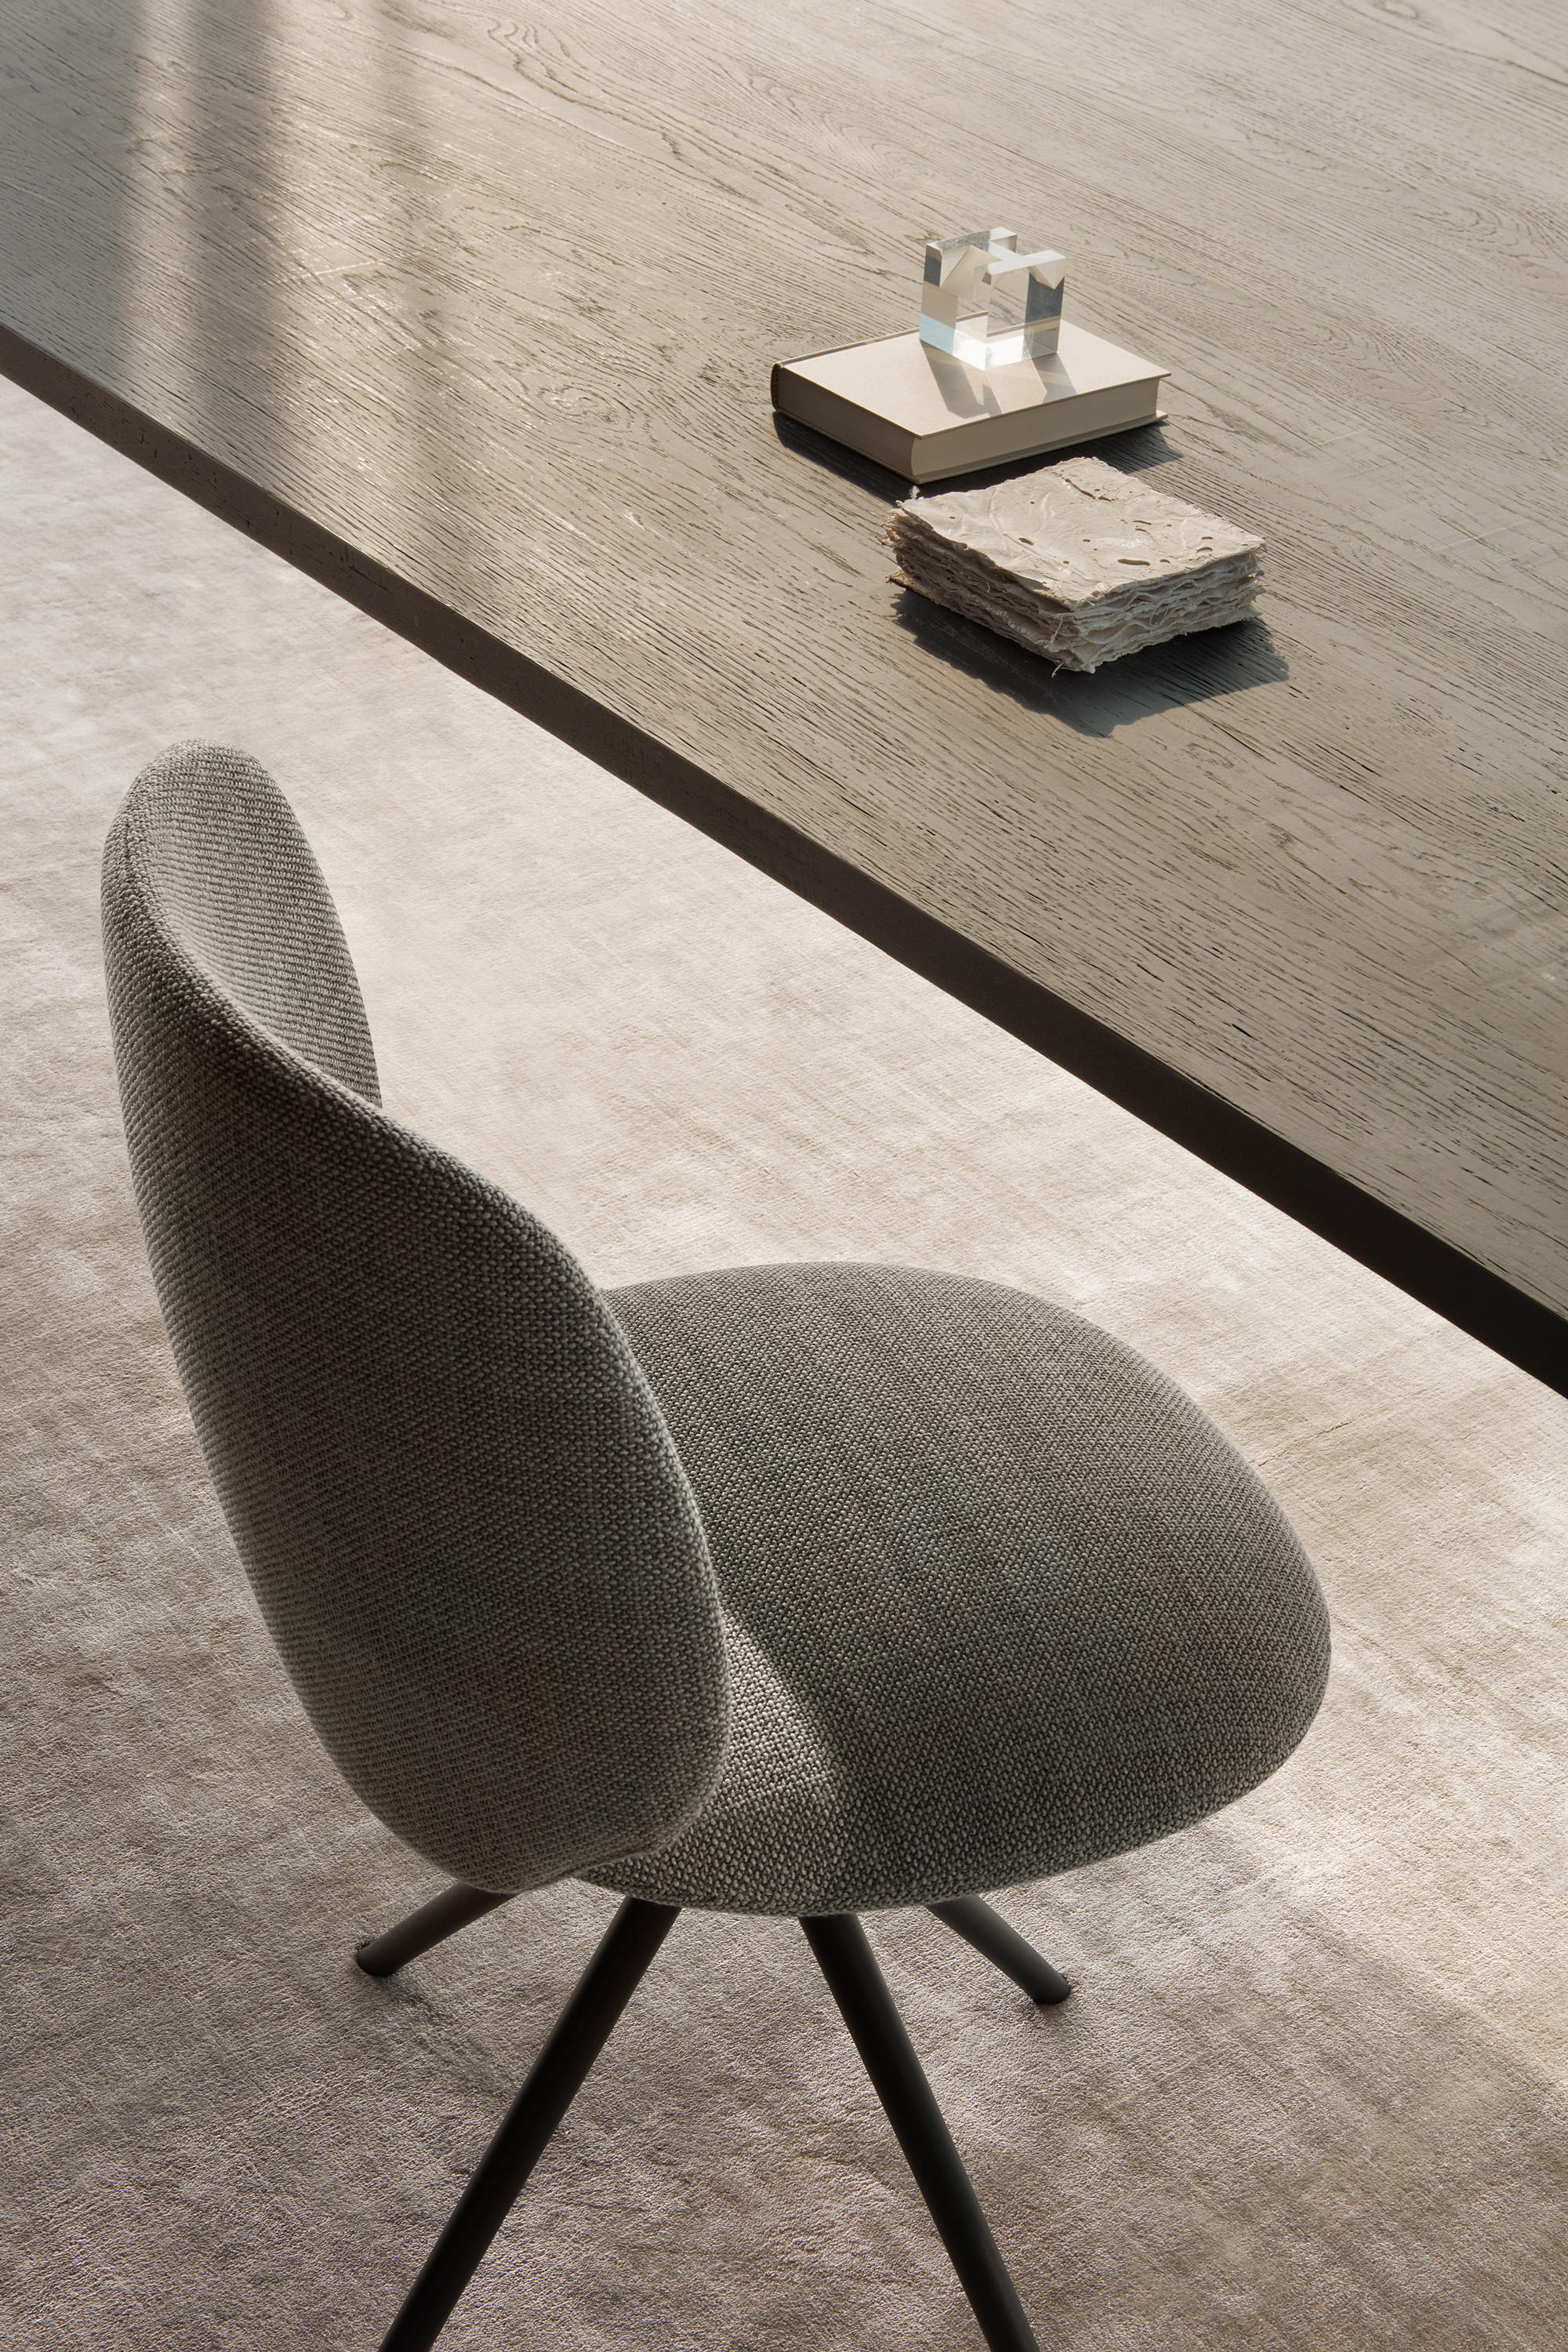 Tense Material Carbon & designer furniture